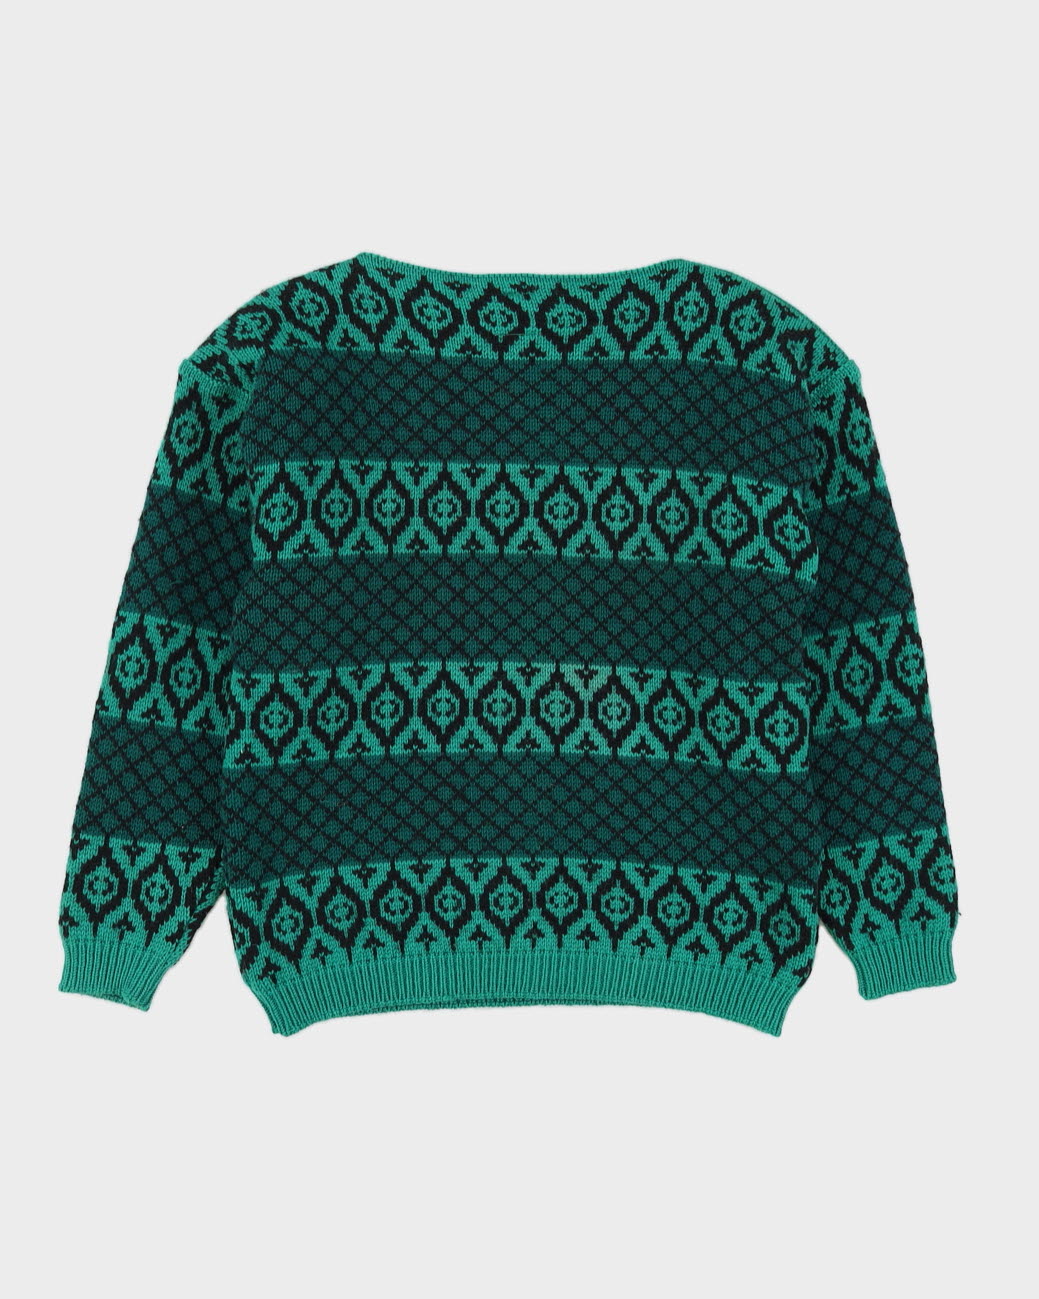 Vintage 1970s Norvyk Green Knitted Jumper - S